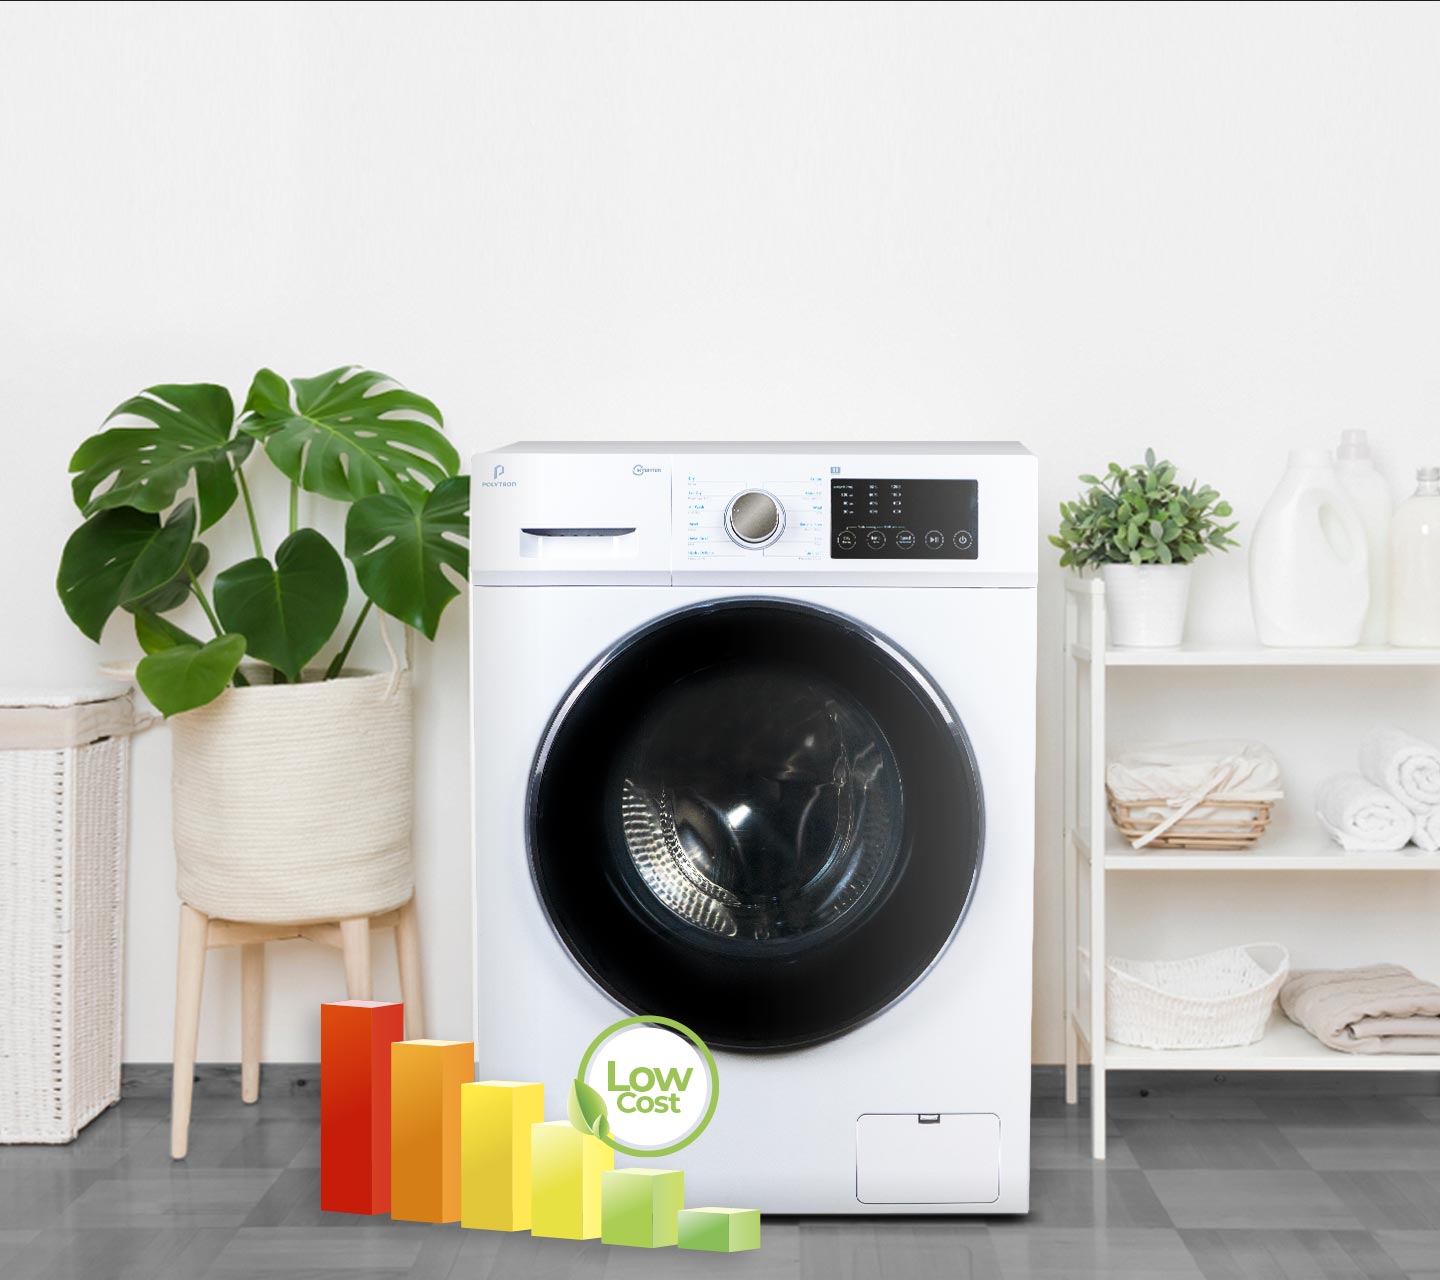 Harga Mesin Cuci Front Loading hemat listrik dari Polytron, lebih murah dari laundry